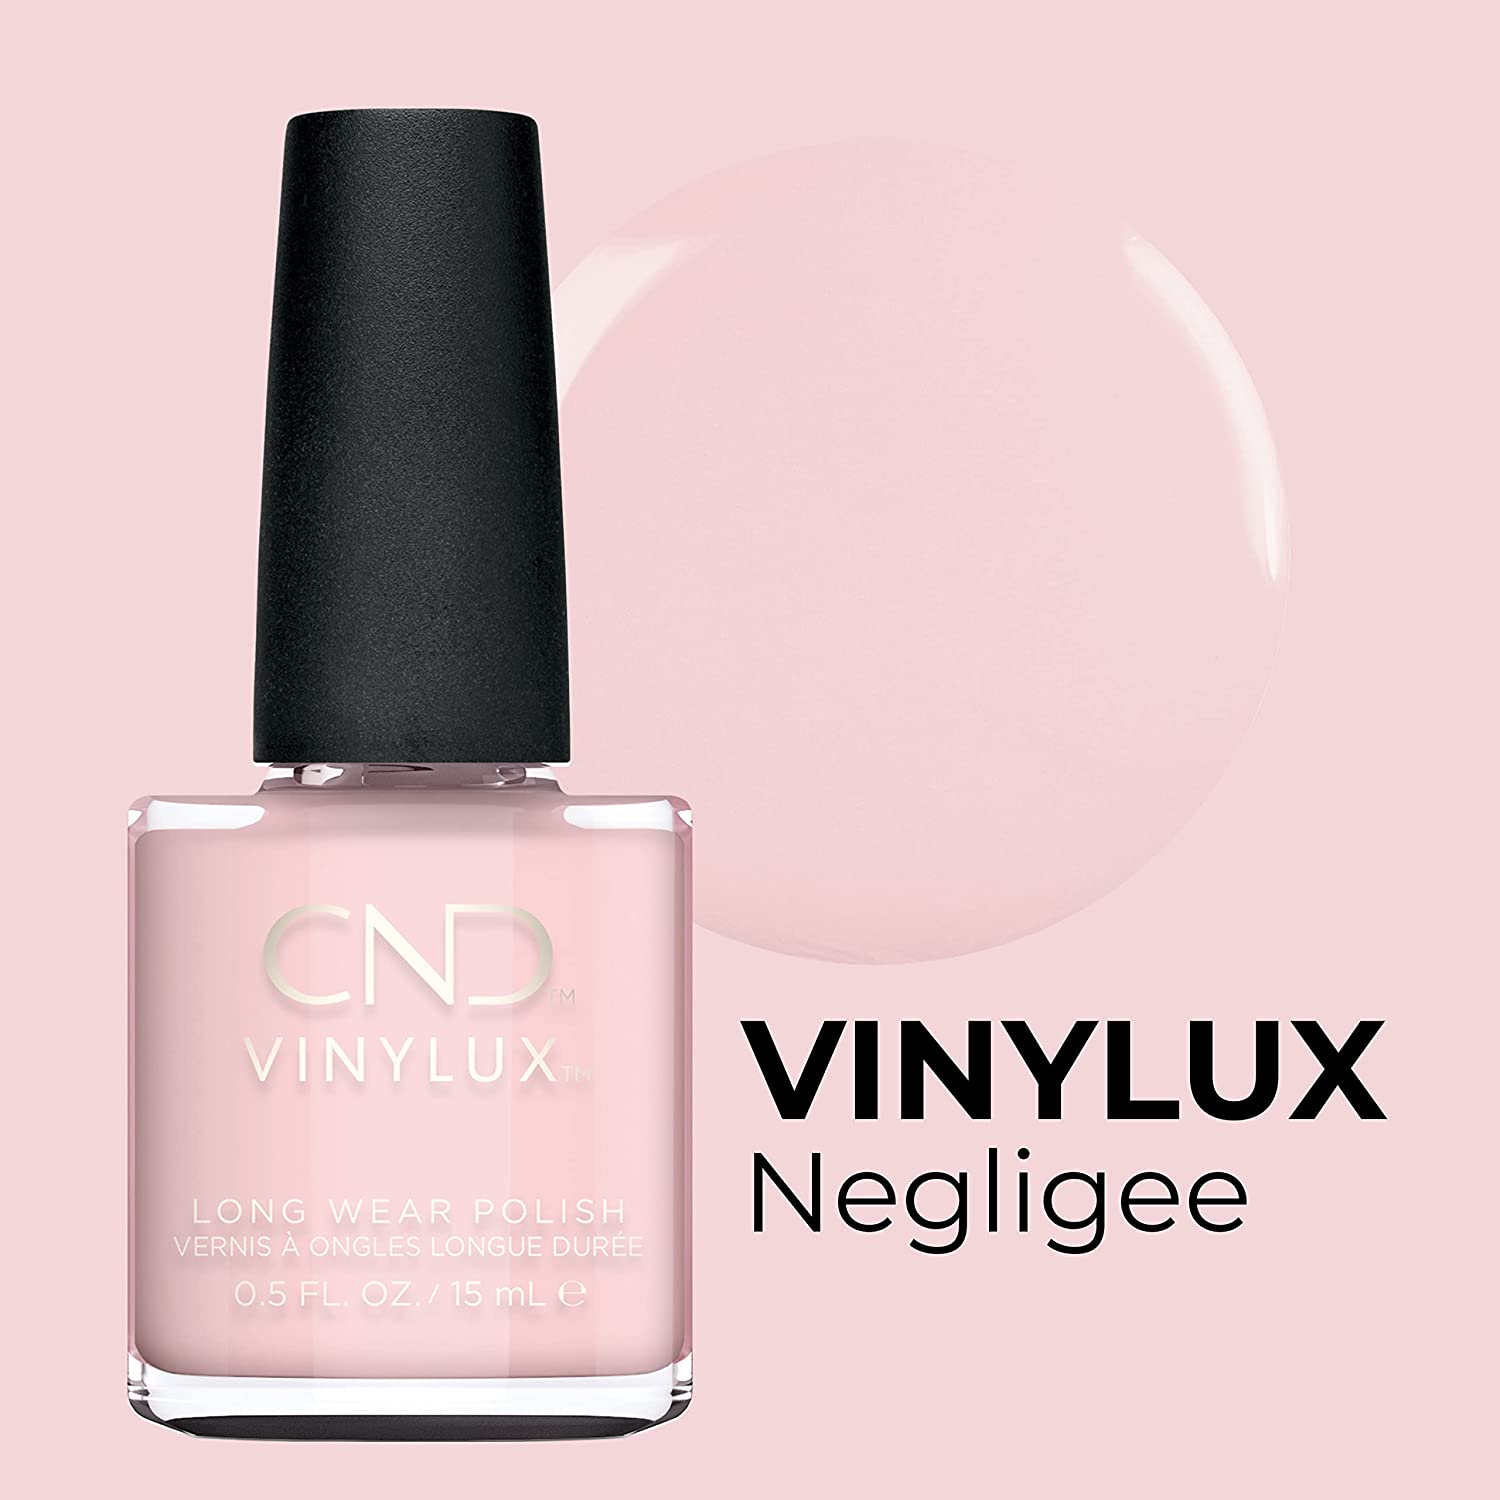 CND Vinylux Longwear Nail Polish, Gel-like Shine & Chip Resistant Color, Negligee, 0.5 Fl Oz